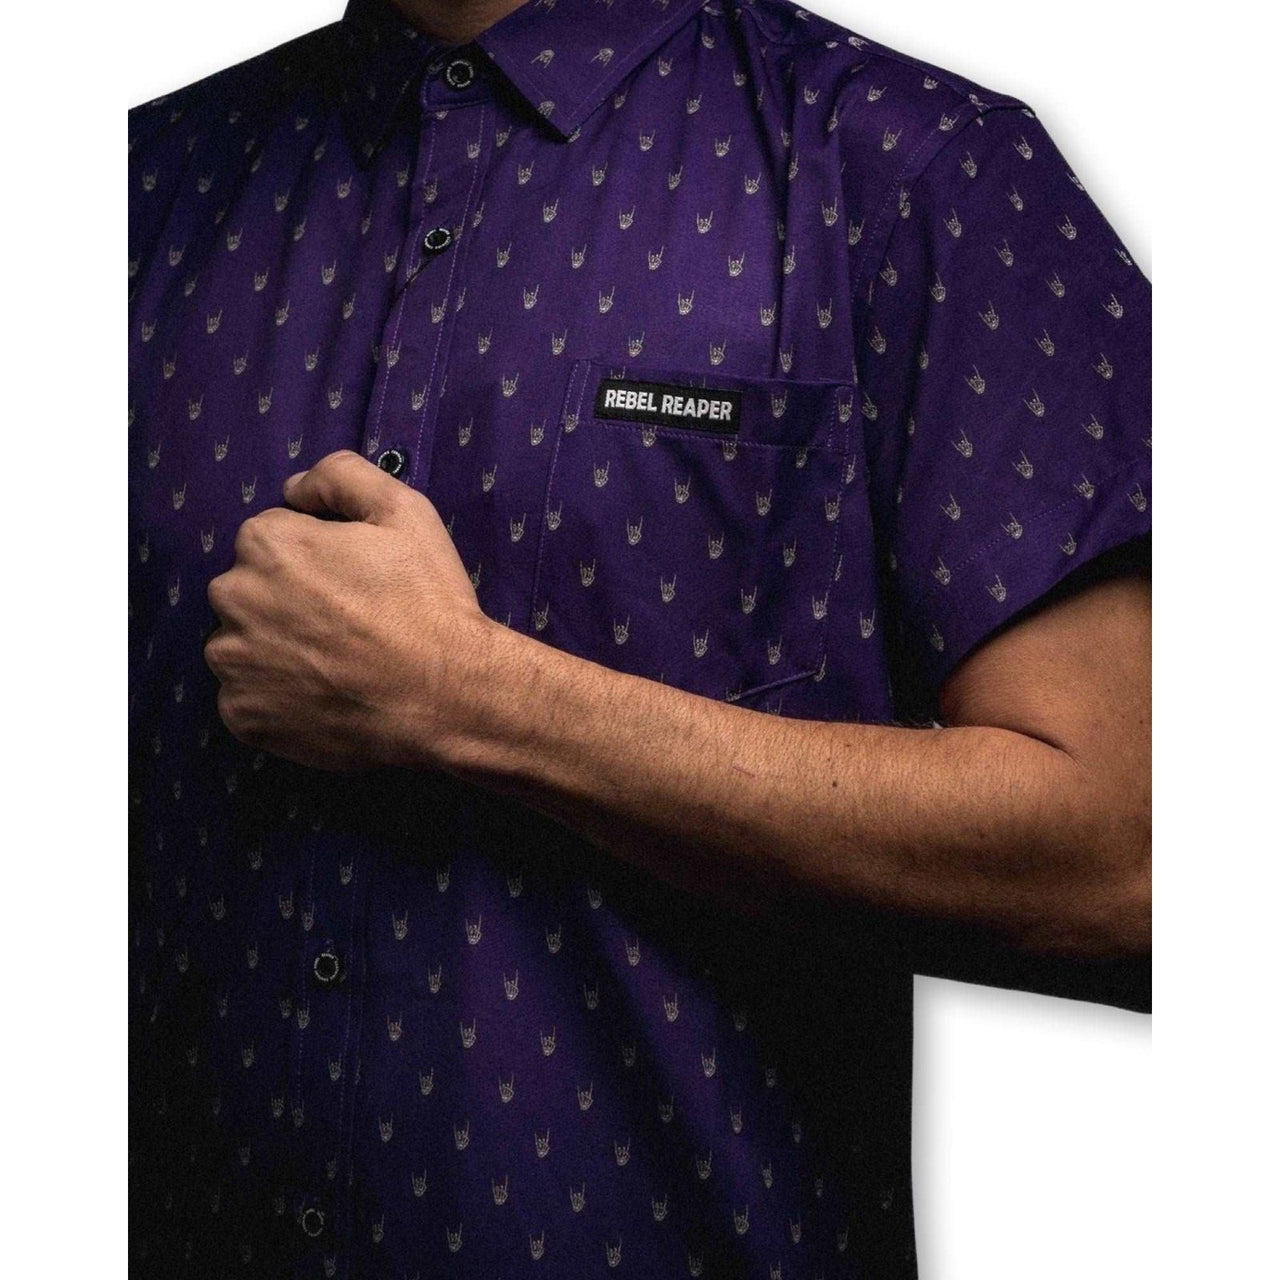 Purple Metal Hand Shirt - Rebel Reaper Clothing Company Button Up Shirt Men's